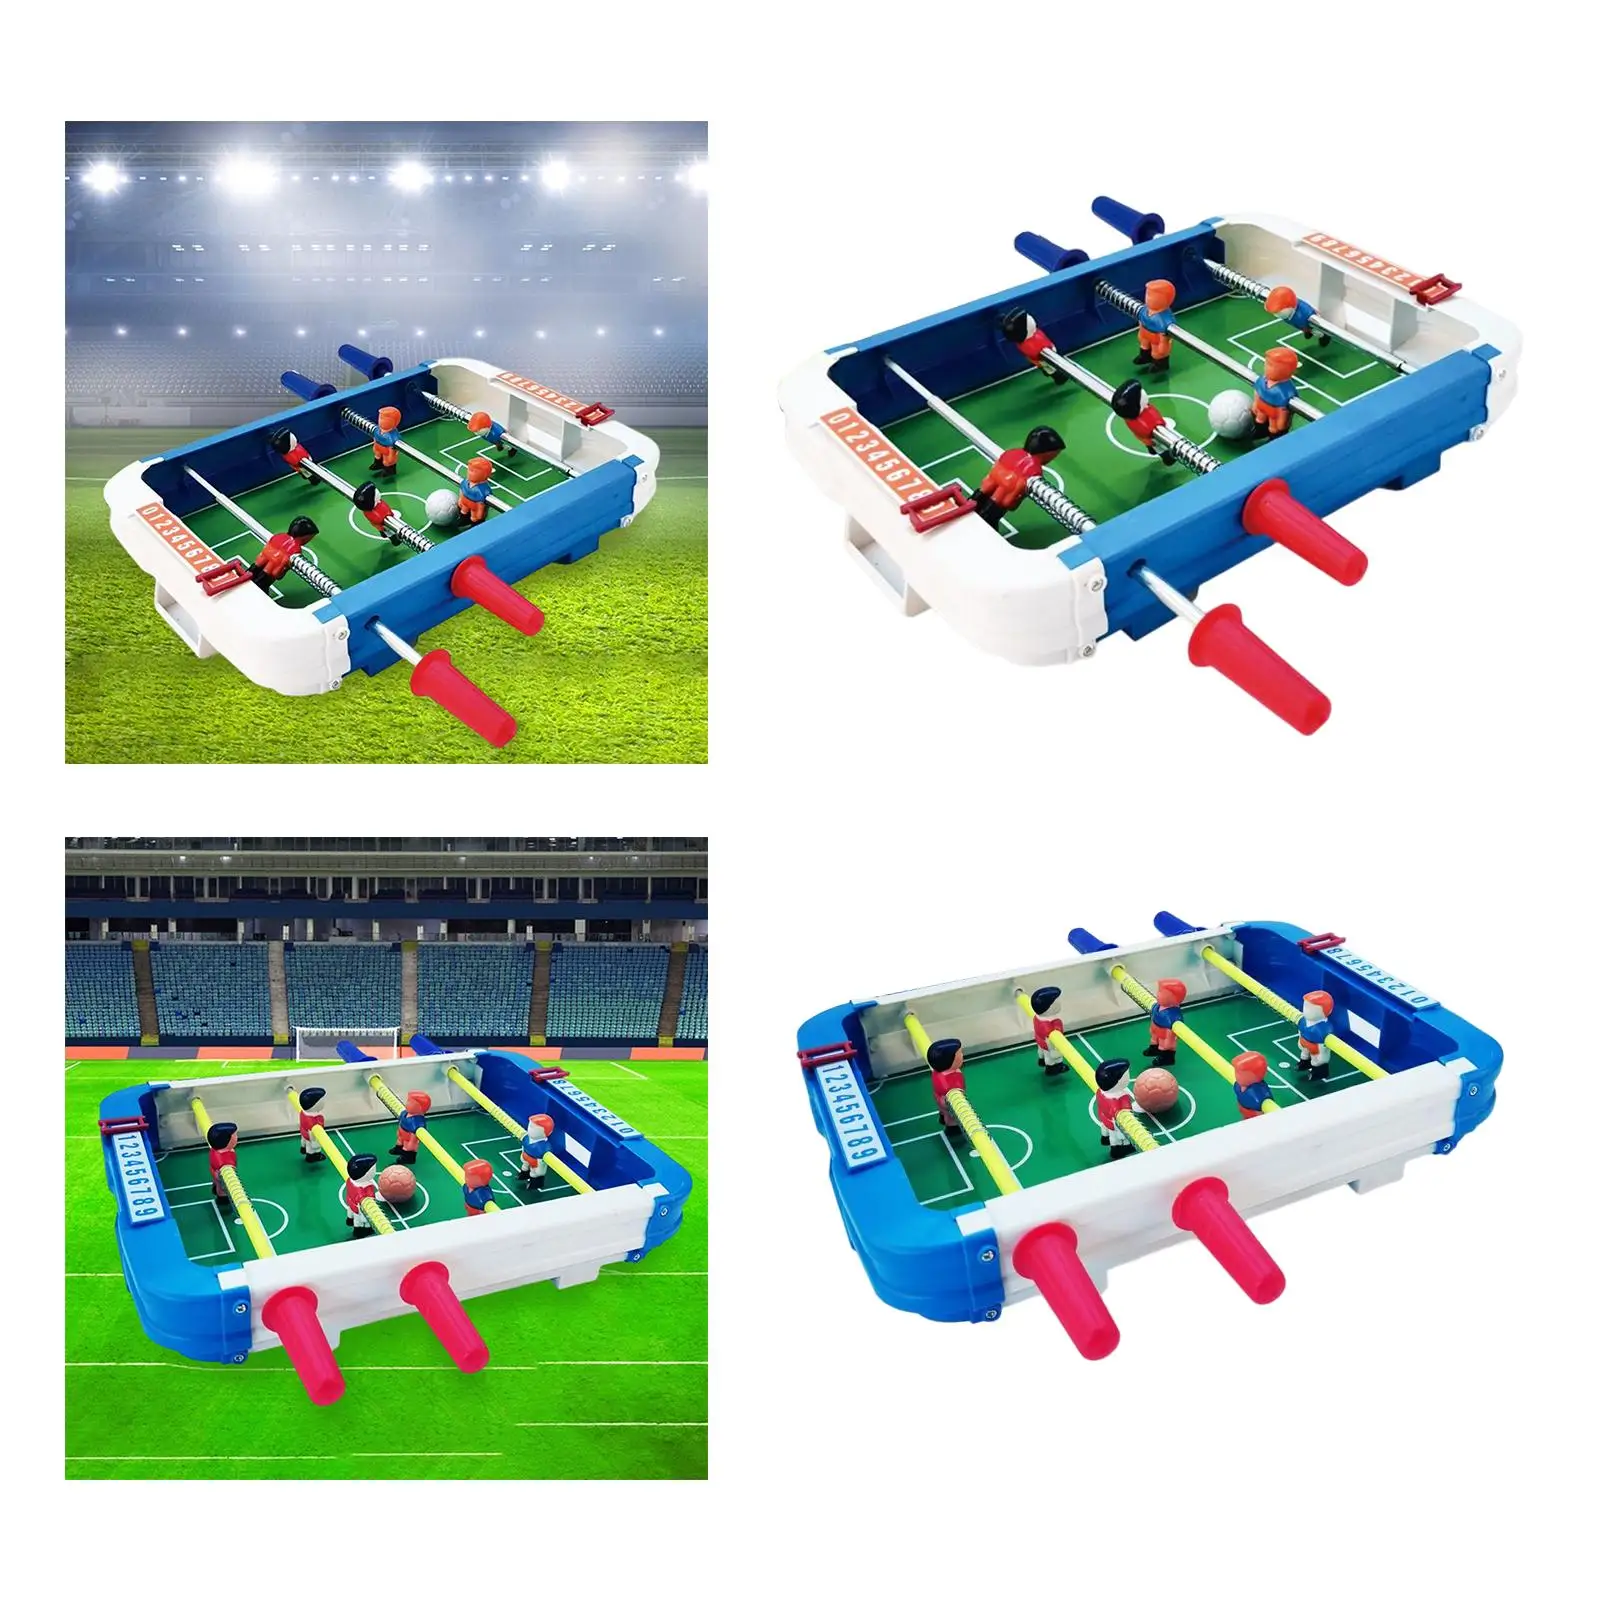 Compact Mini Foosball Table, Desktop Football Board Games Table Top Soccer Intellectual Developmental for Boys Girls Kids